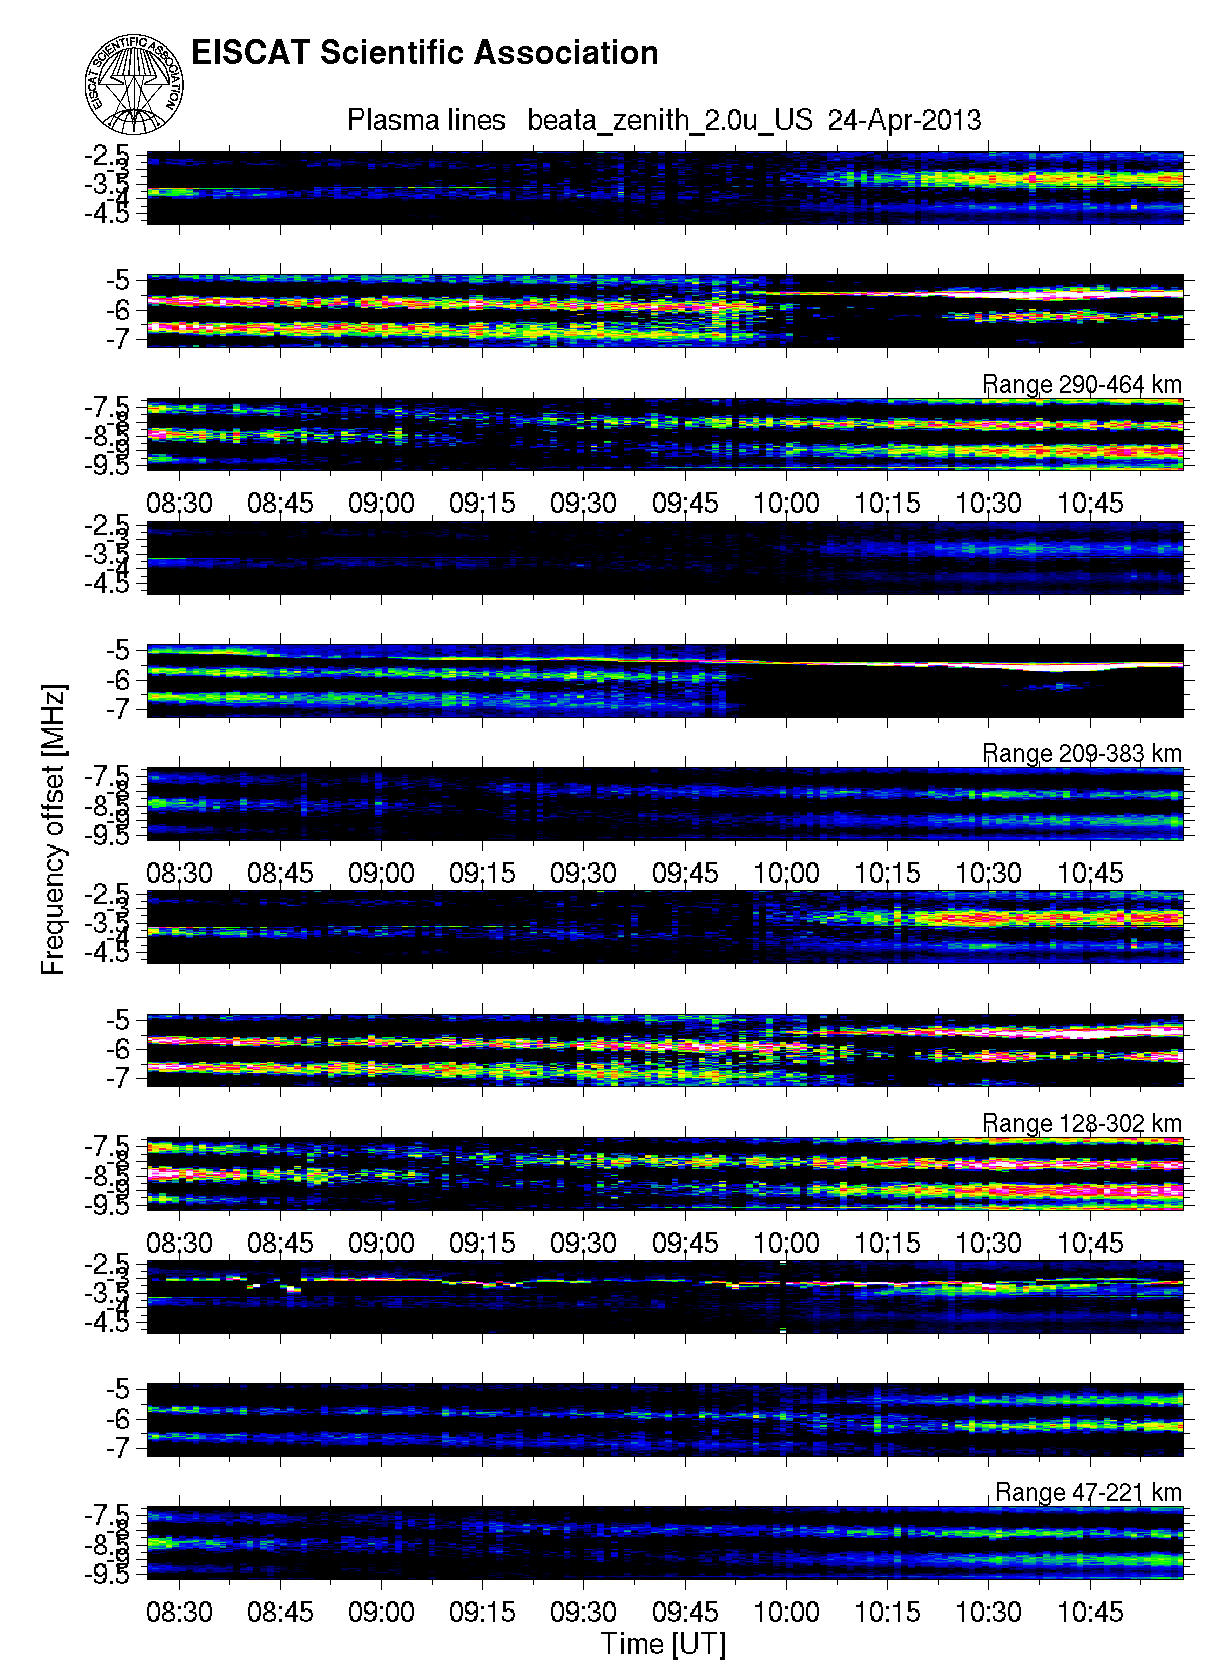 plots/2013-04-24_beata1_60_T_plasmaline.png